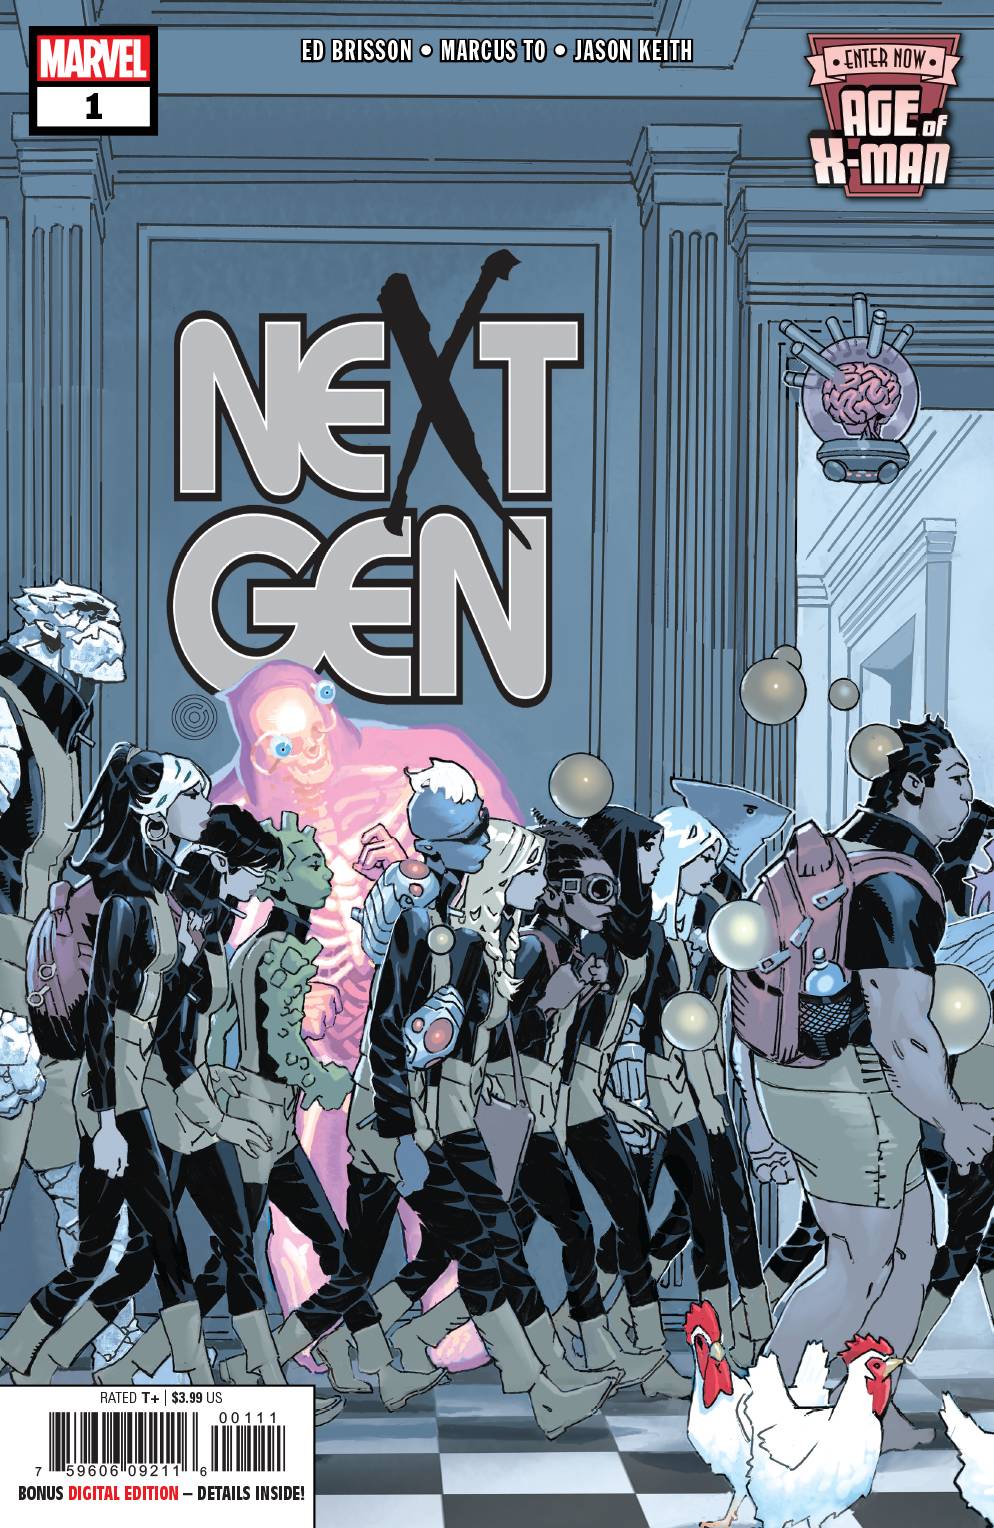 AGE OF X-MAN NEXTGEN #1 (OF 5) 02/13/19